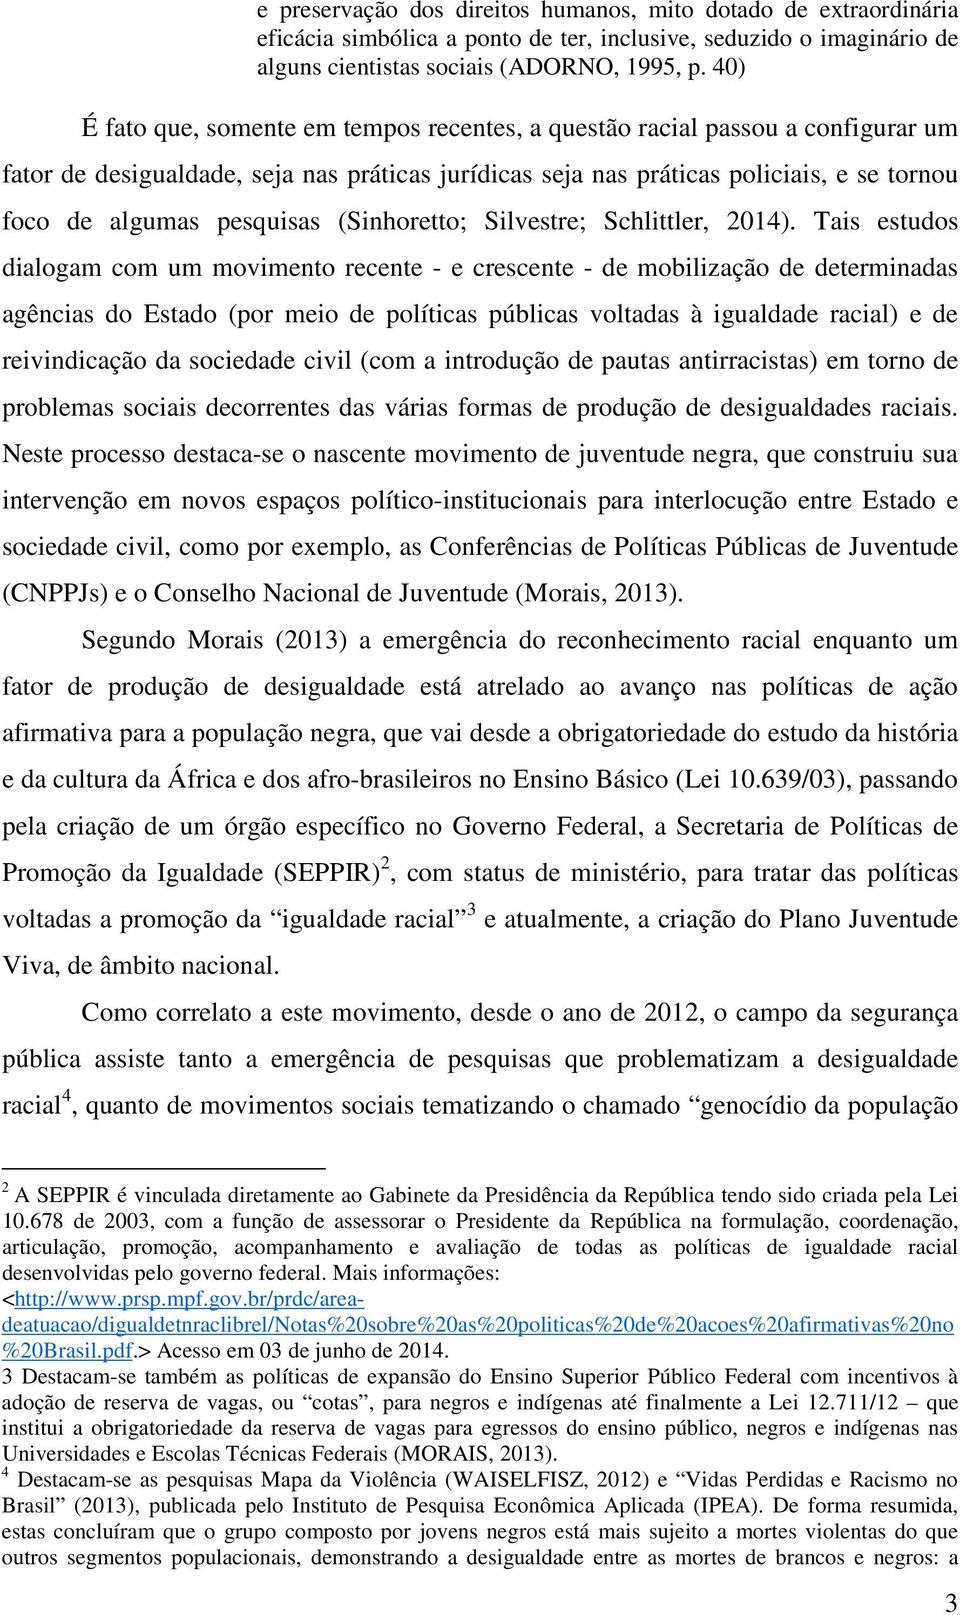 pesquisas (Sinhoretto; Silvestre; Schlittler, 2014).